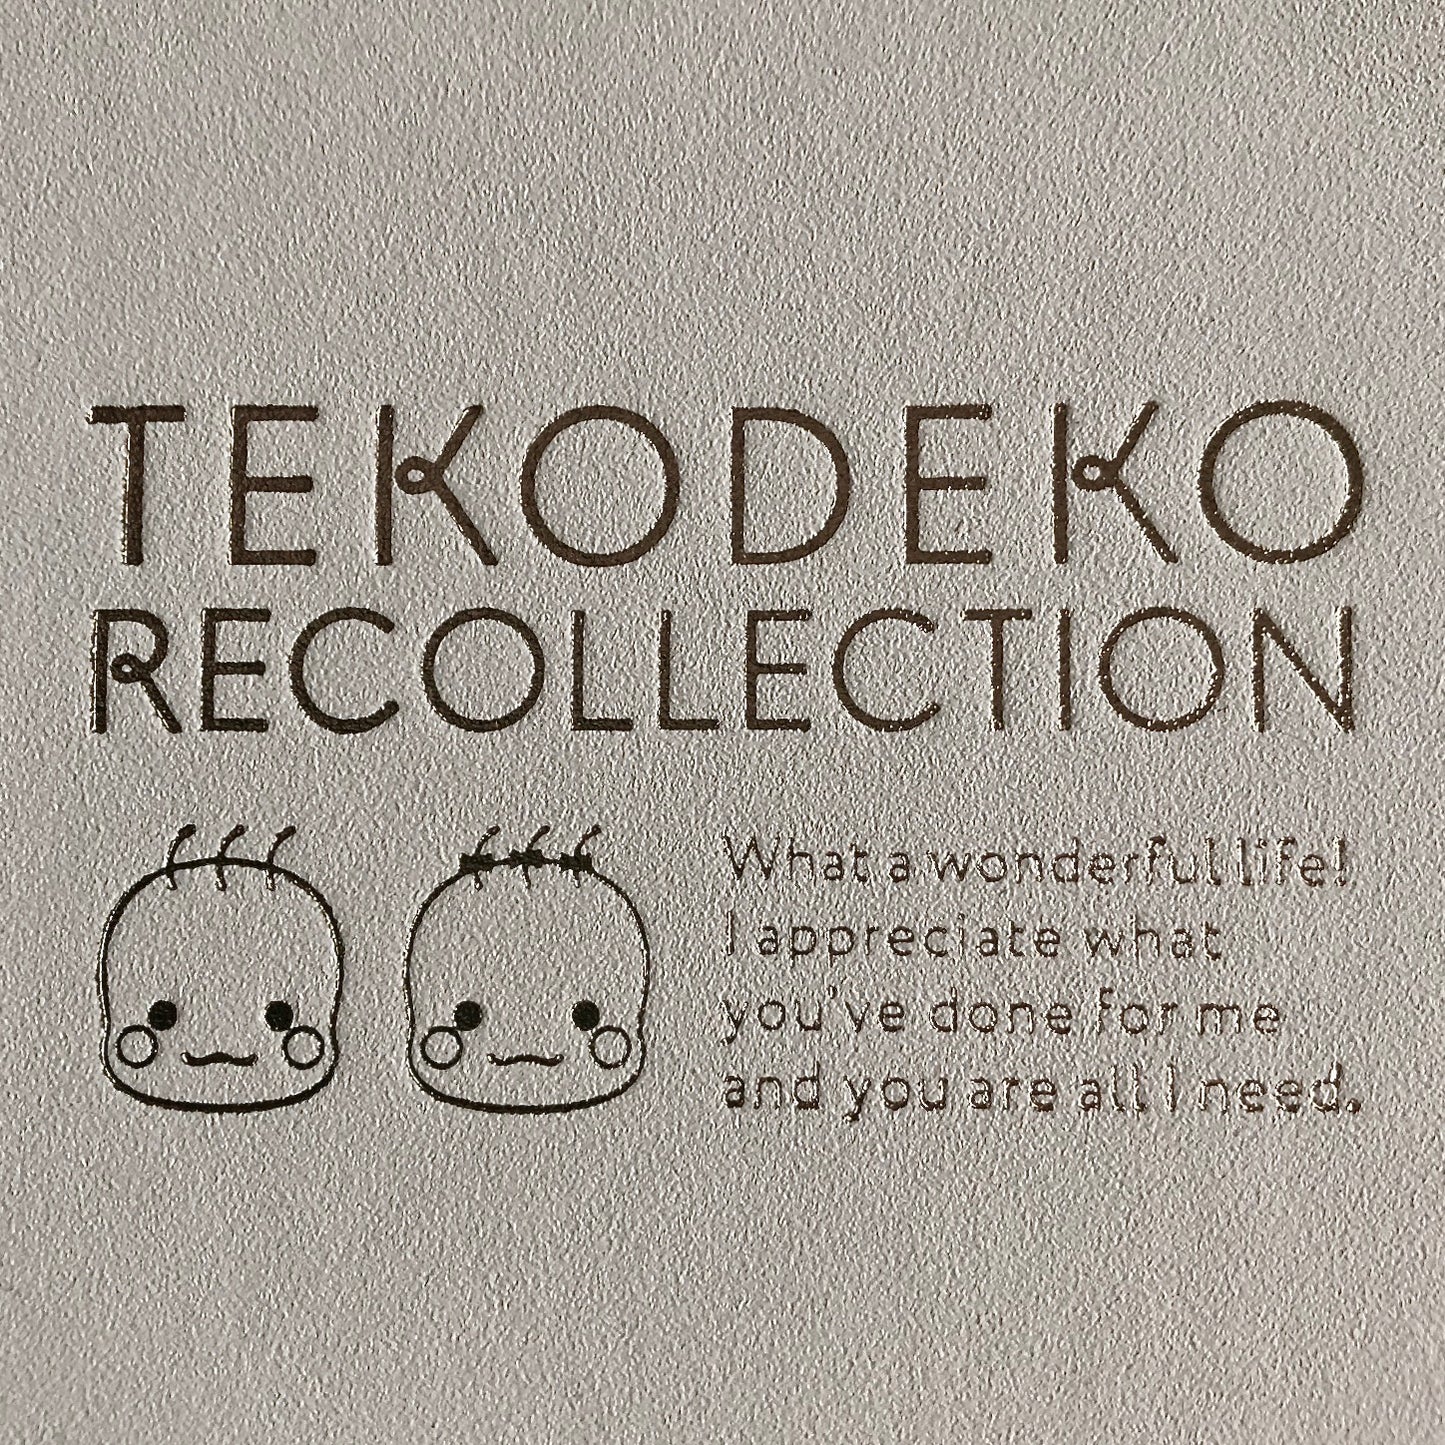 TEKODEKO RECOLLECTION回想アルバム（ベージュ、キャラクターあり）